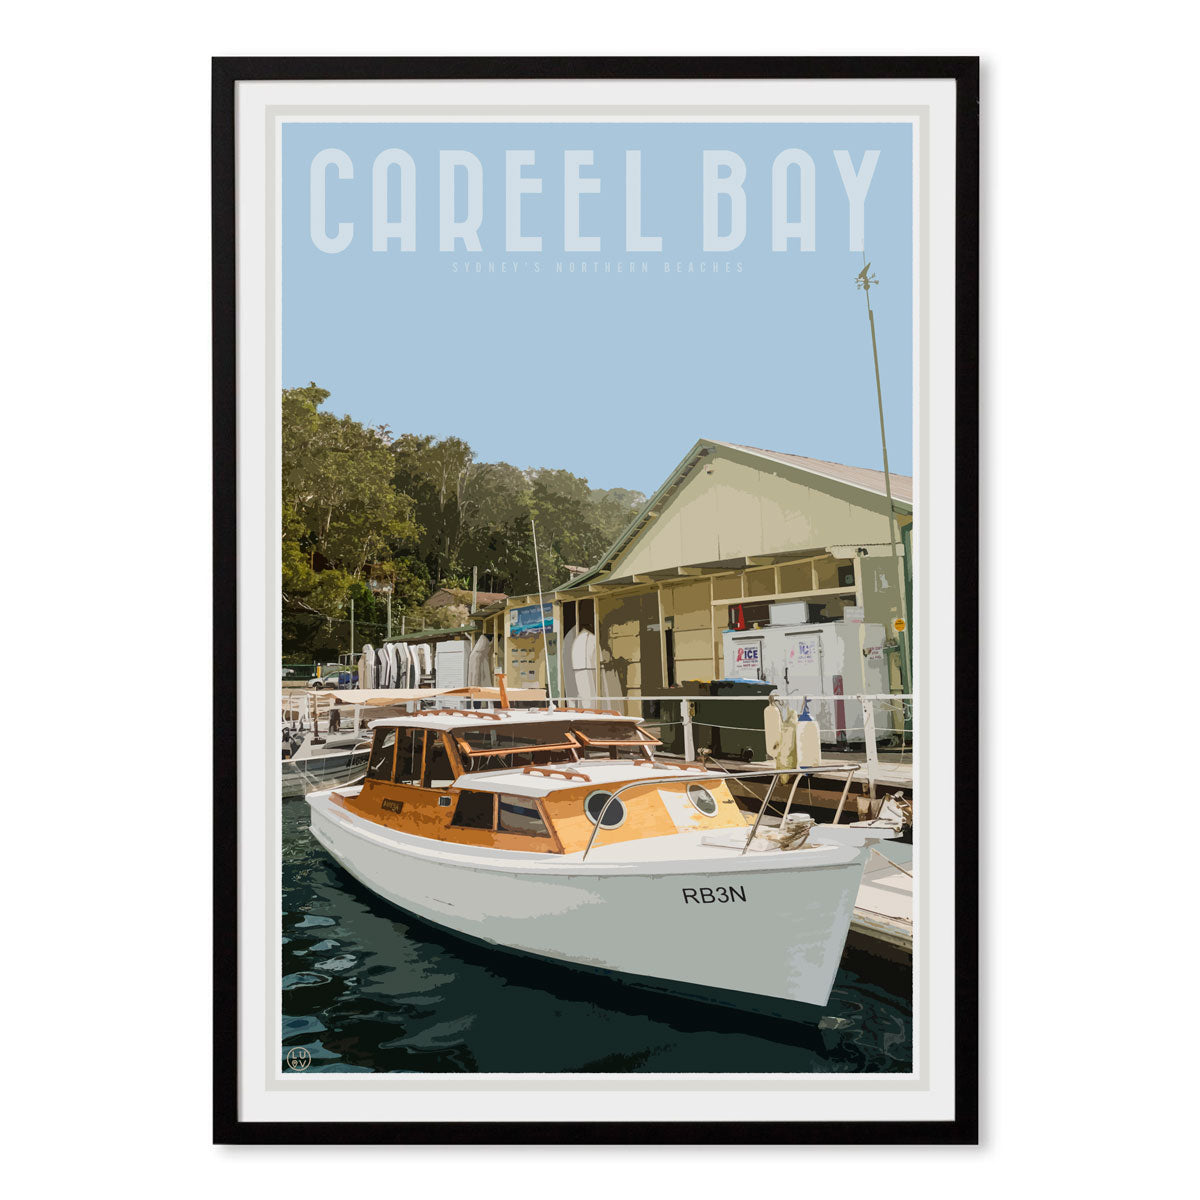 Careel Bay print and poster. Travel style original design